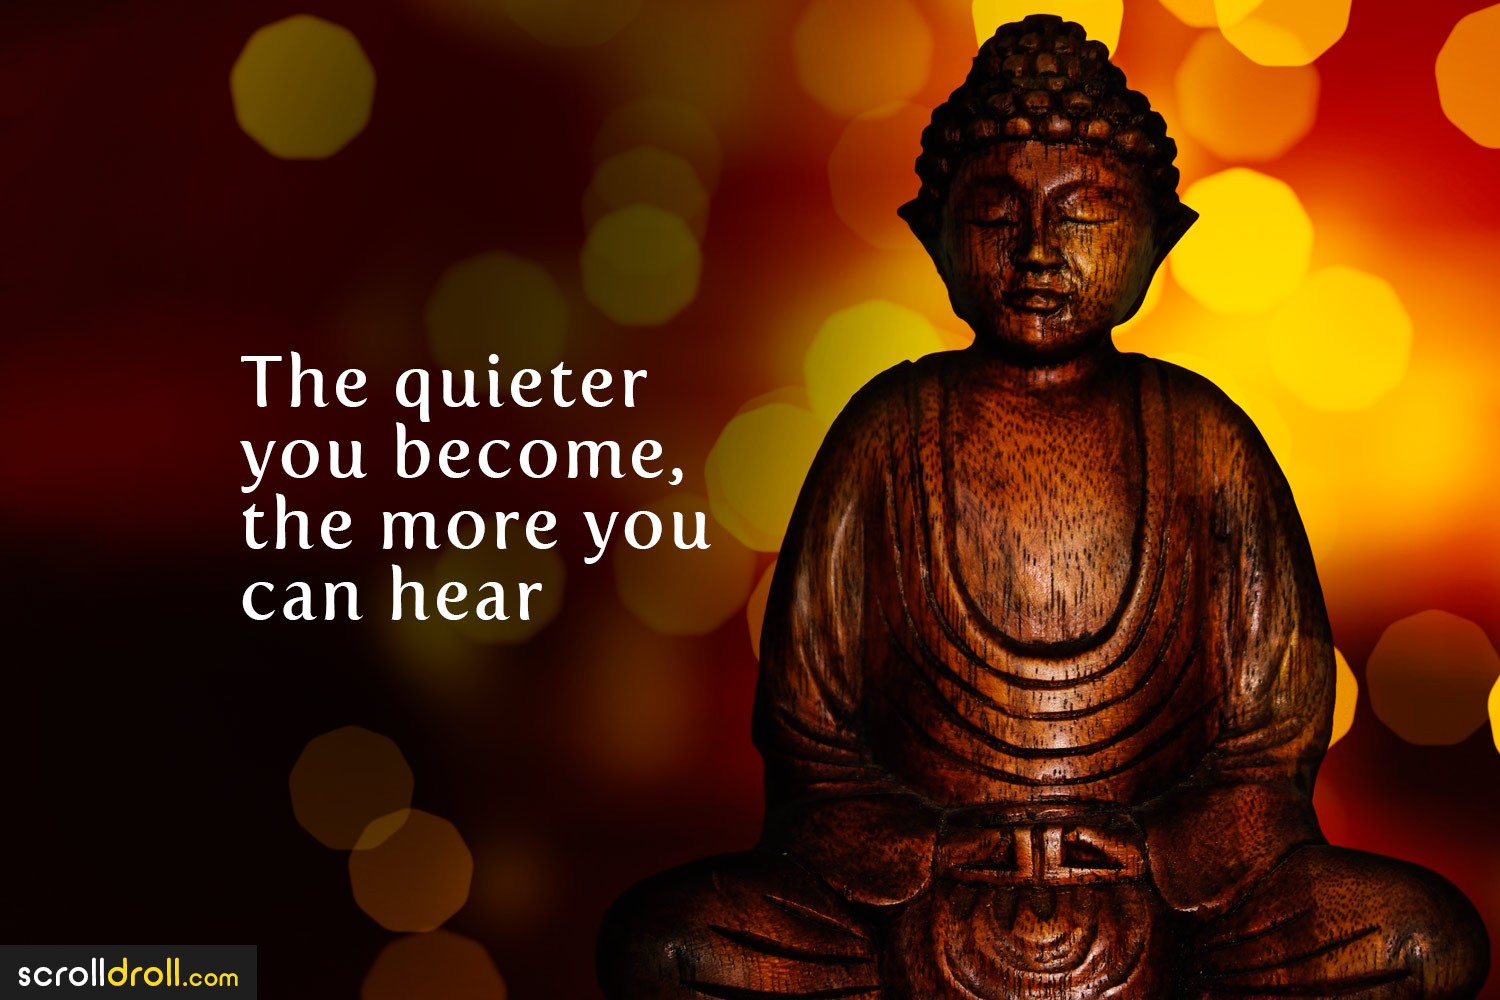 gautam buddha thoughts